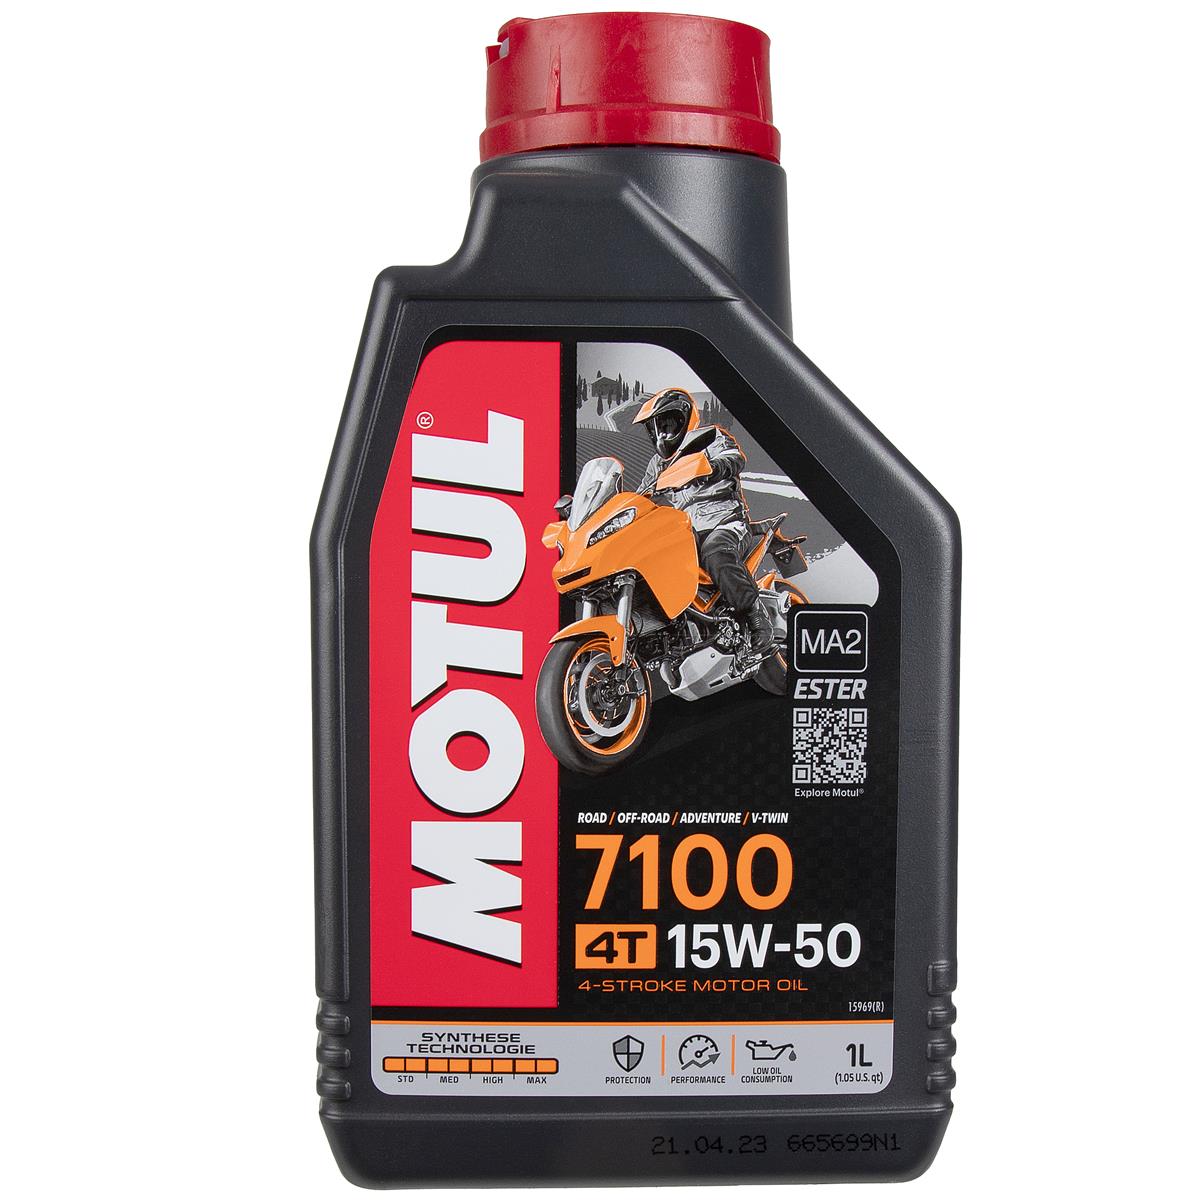 Motul Engine Oil 7100 4T 15W50, 1 Liter